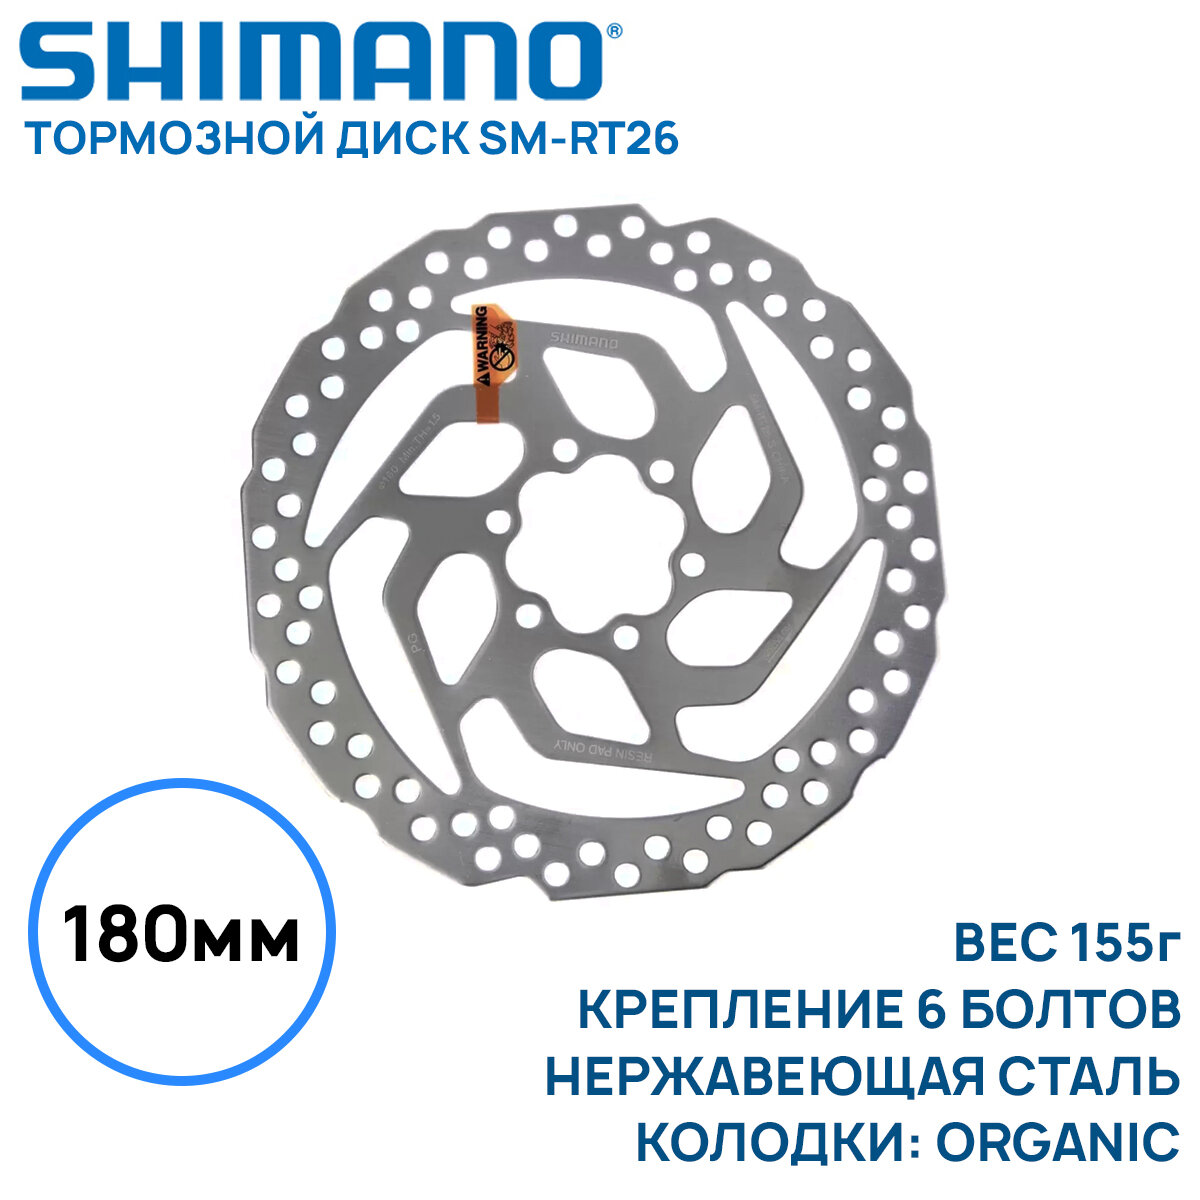 Тормозной диск Shimano SM-RT26, 180мм, под 6 болтов, без коробки (OEM), серебристый